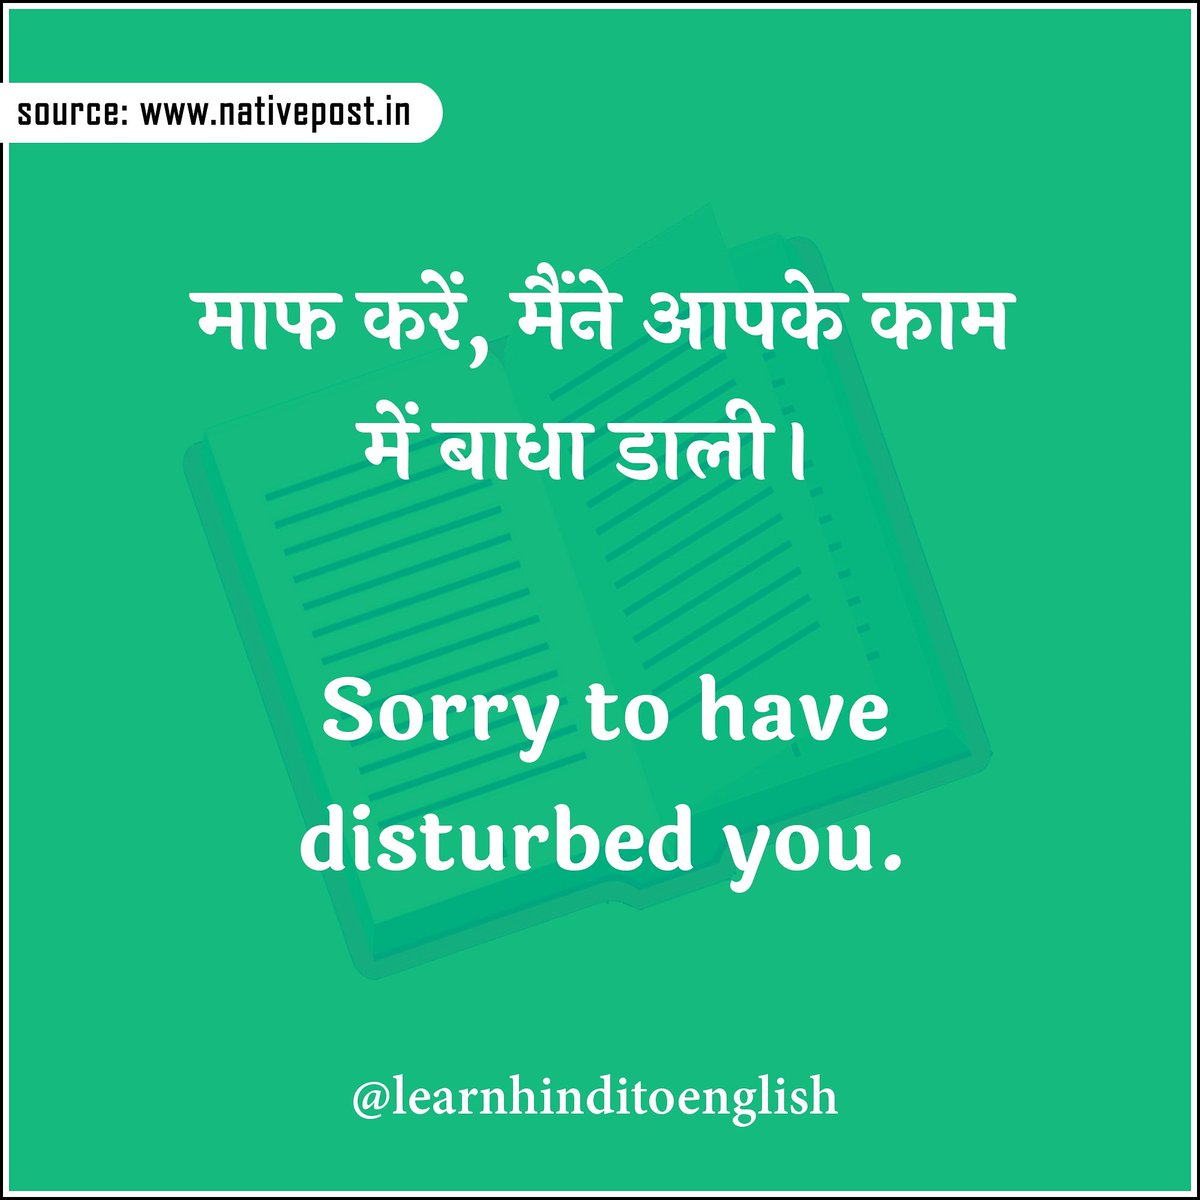 आप भी सीखें अंग्रेजी अब हमारे साथ।

#LearnEnglish #englishlearn #englishtohindi #englishvocabulary #vocabulary #education #sscexam #educational